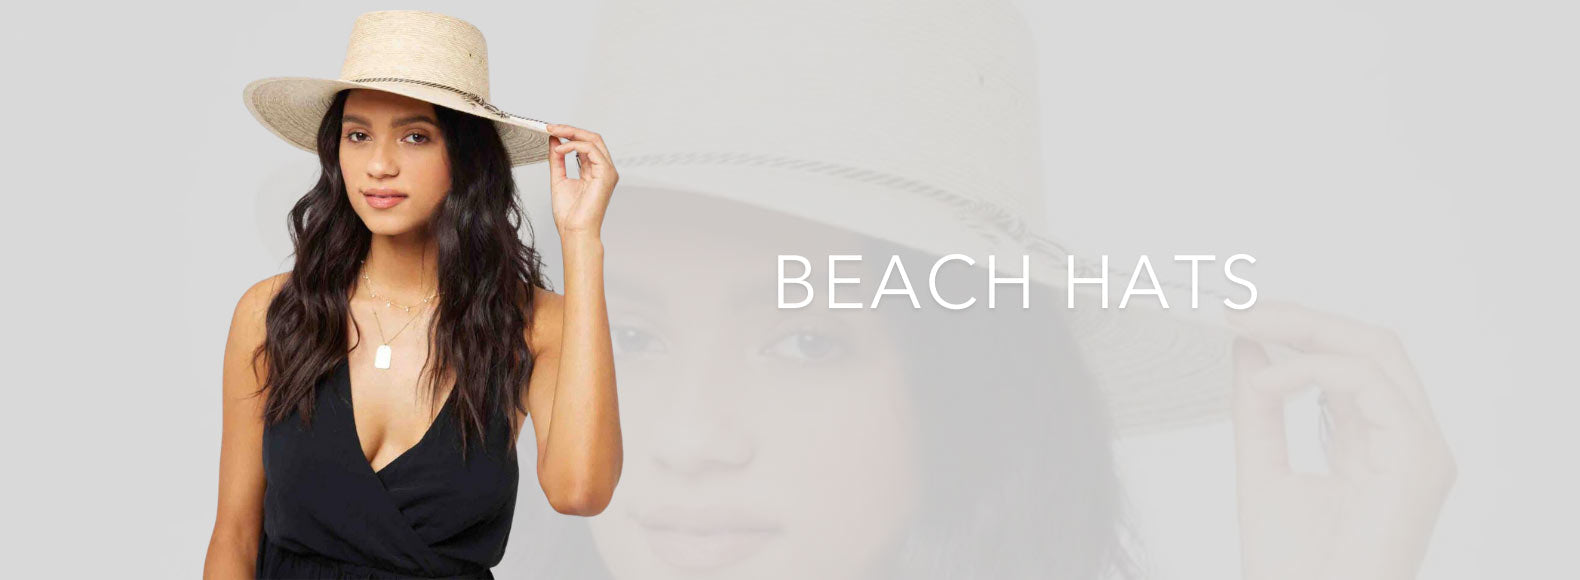 Women's Beach Hats, Straw hats, Sun hats for ladies